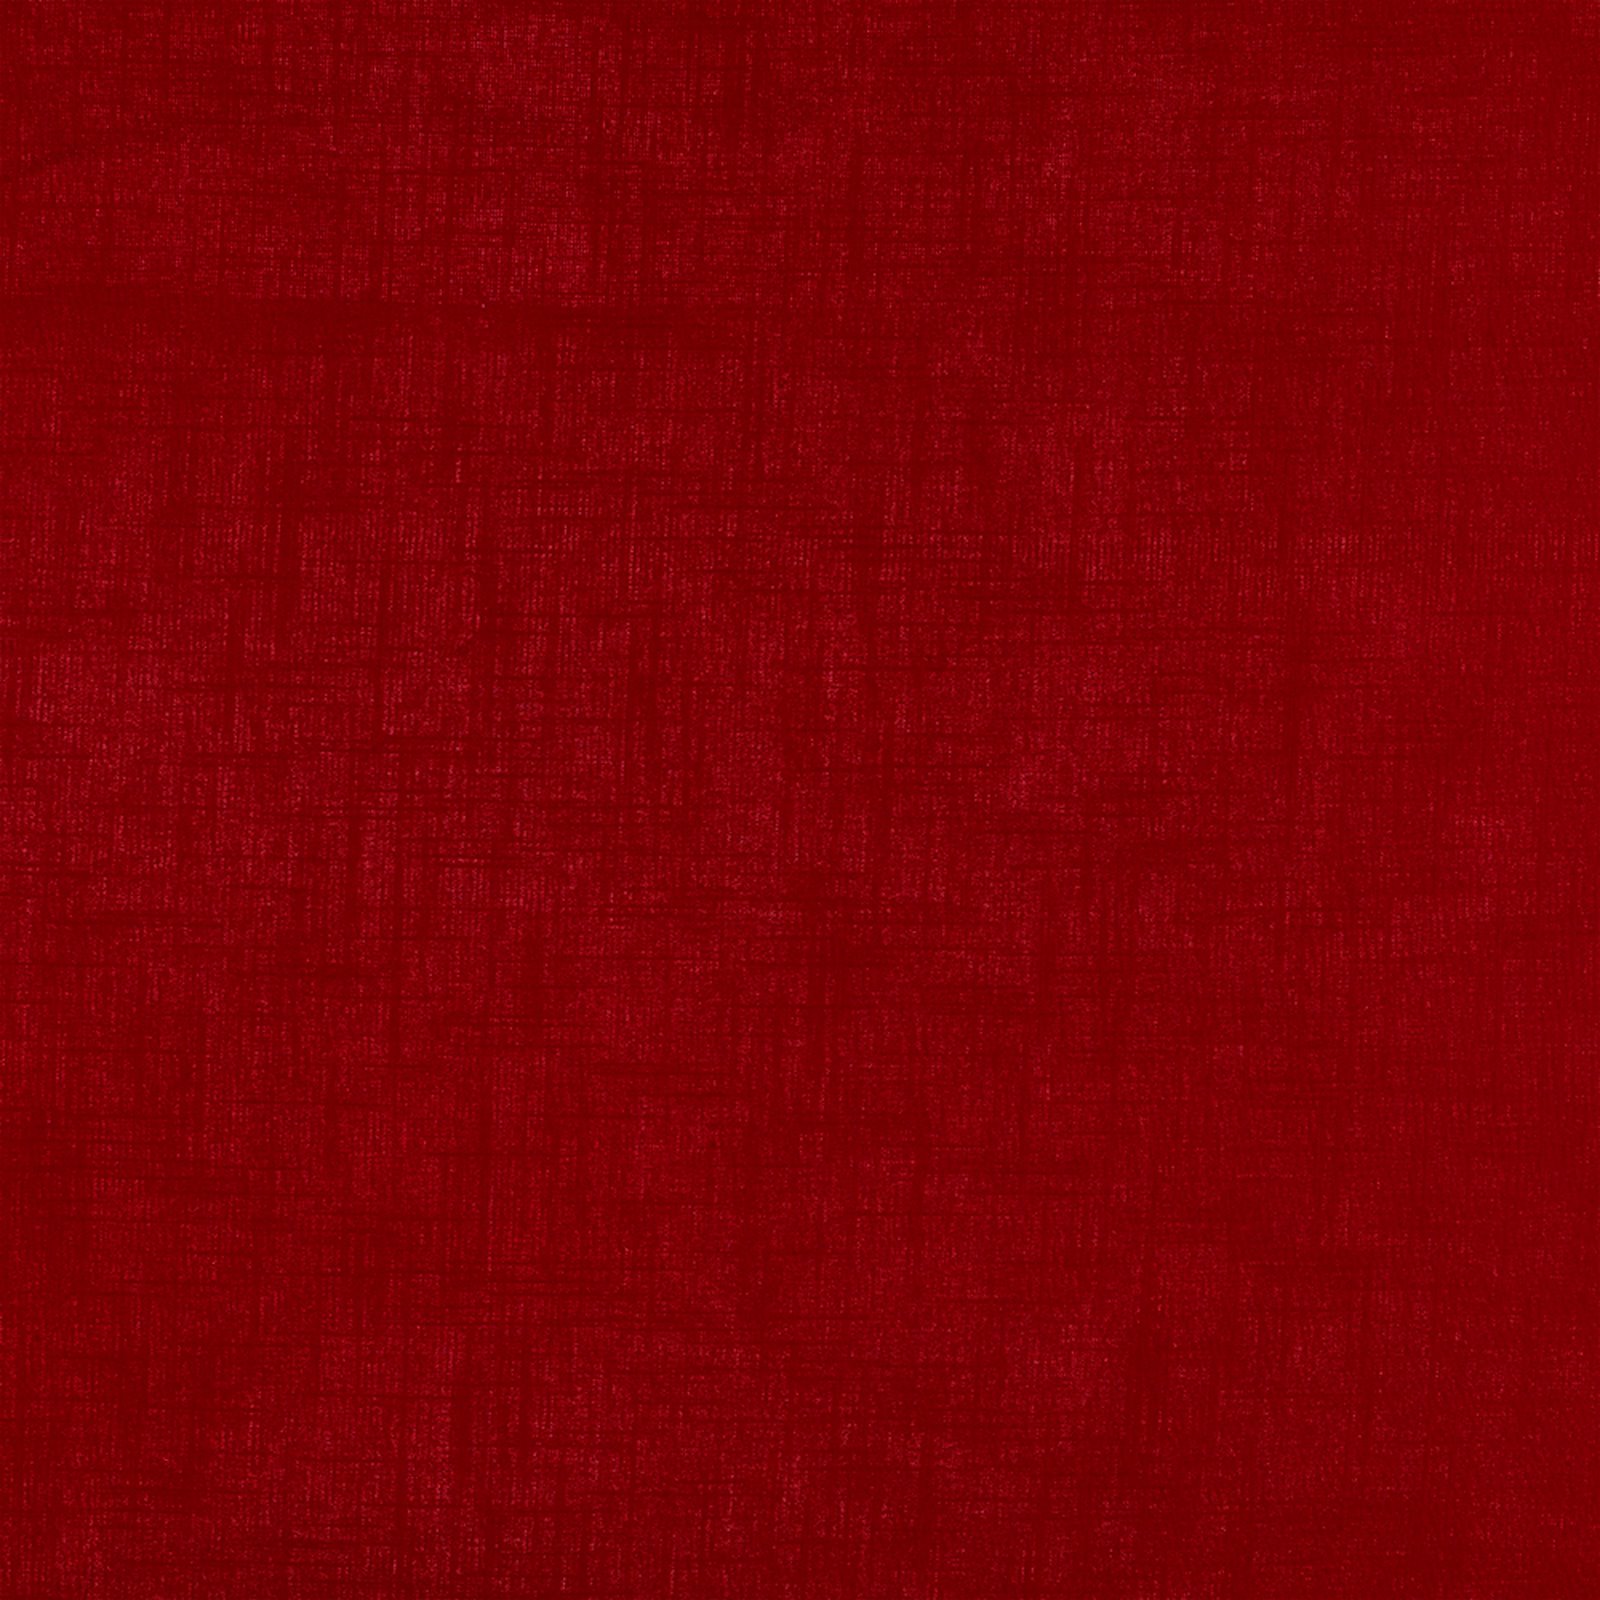 Coarse linen/viscose dark red 850252_pack_solid